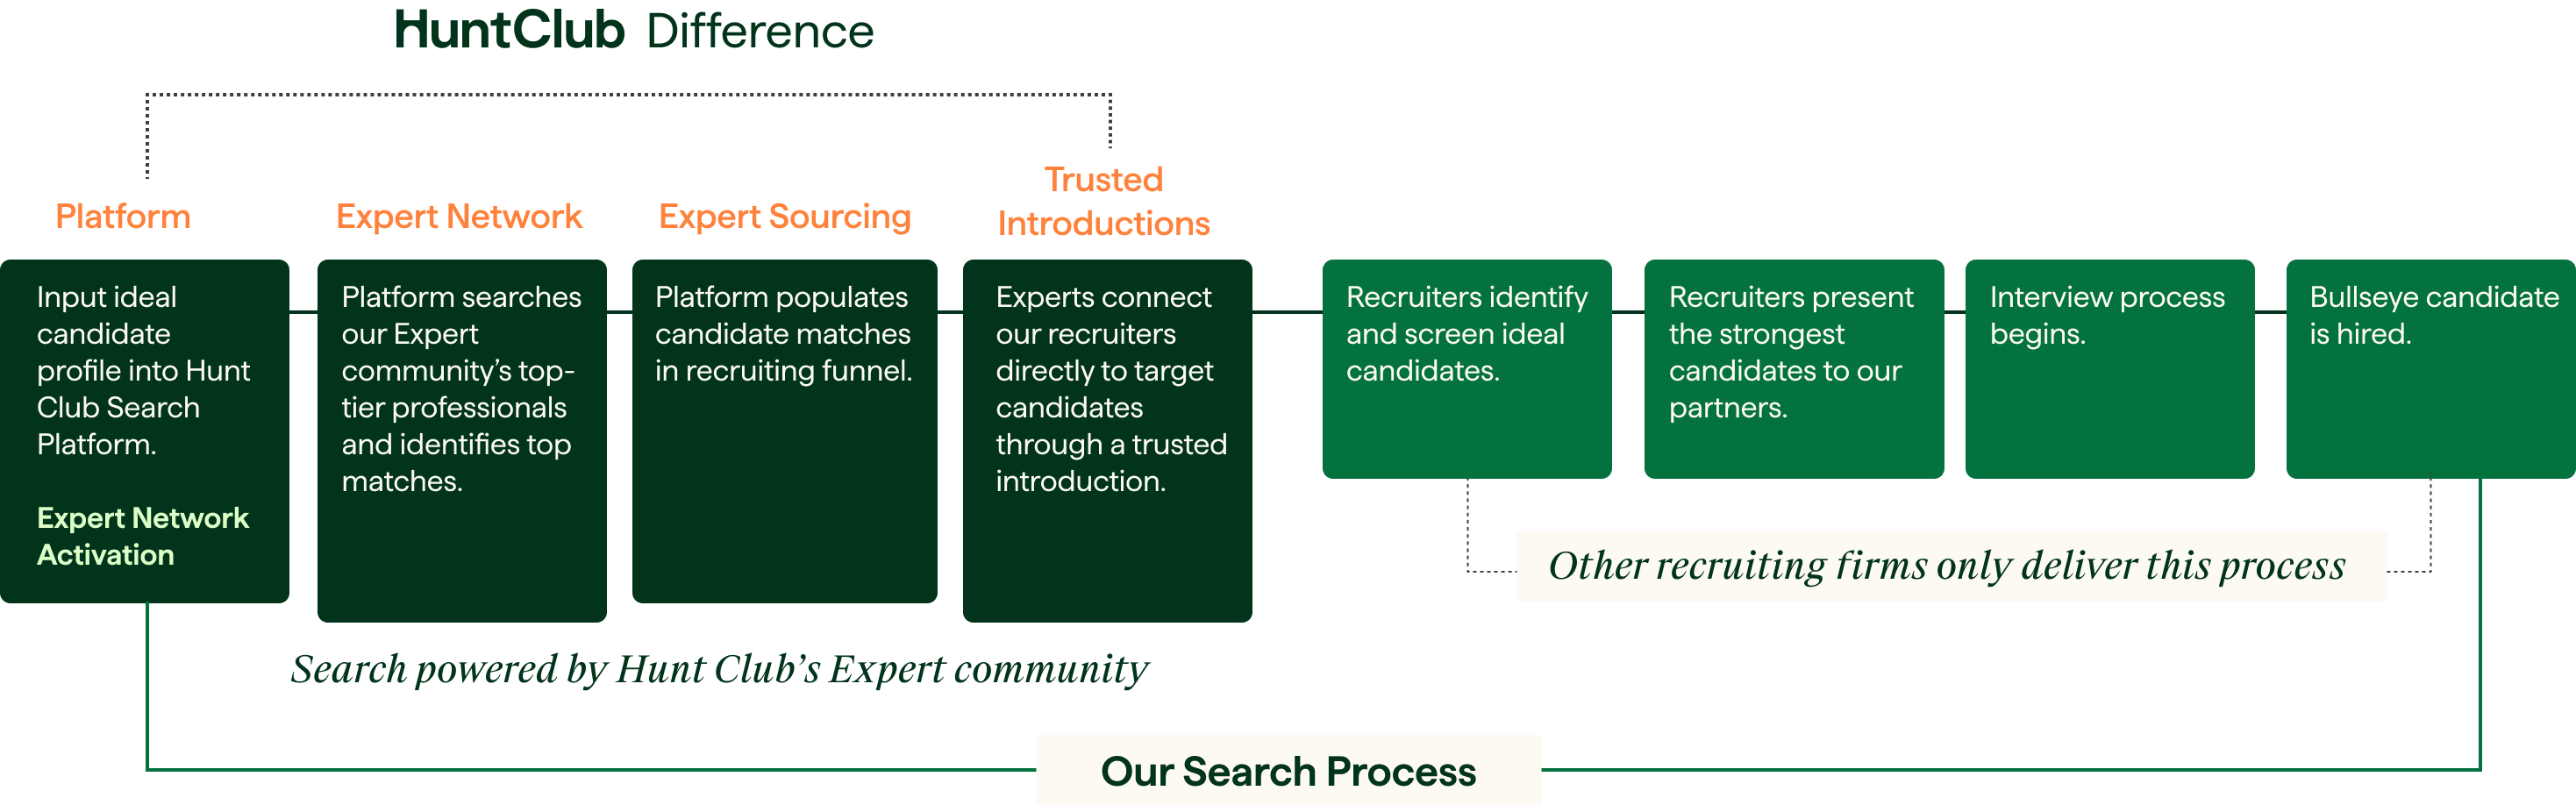 Hunt Club Search Process graphic